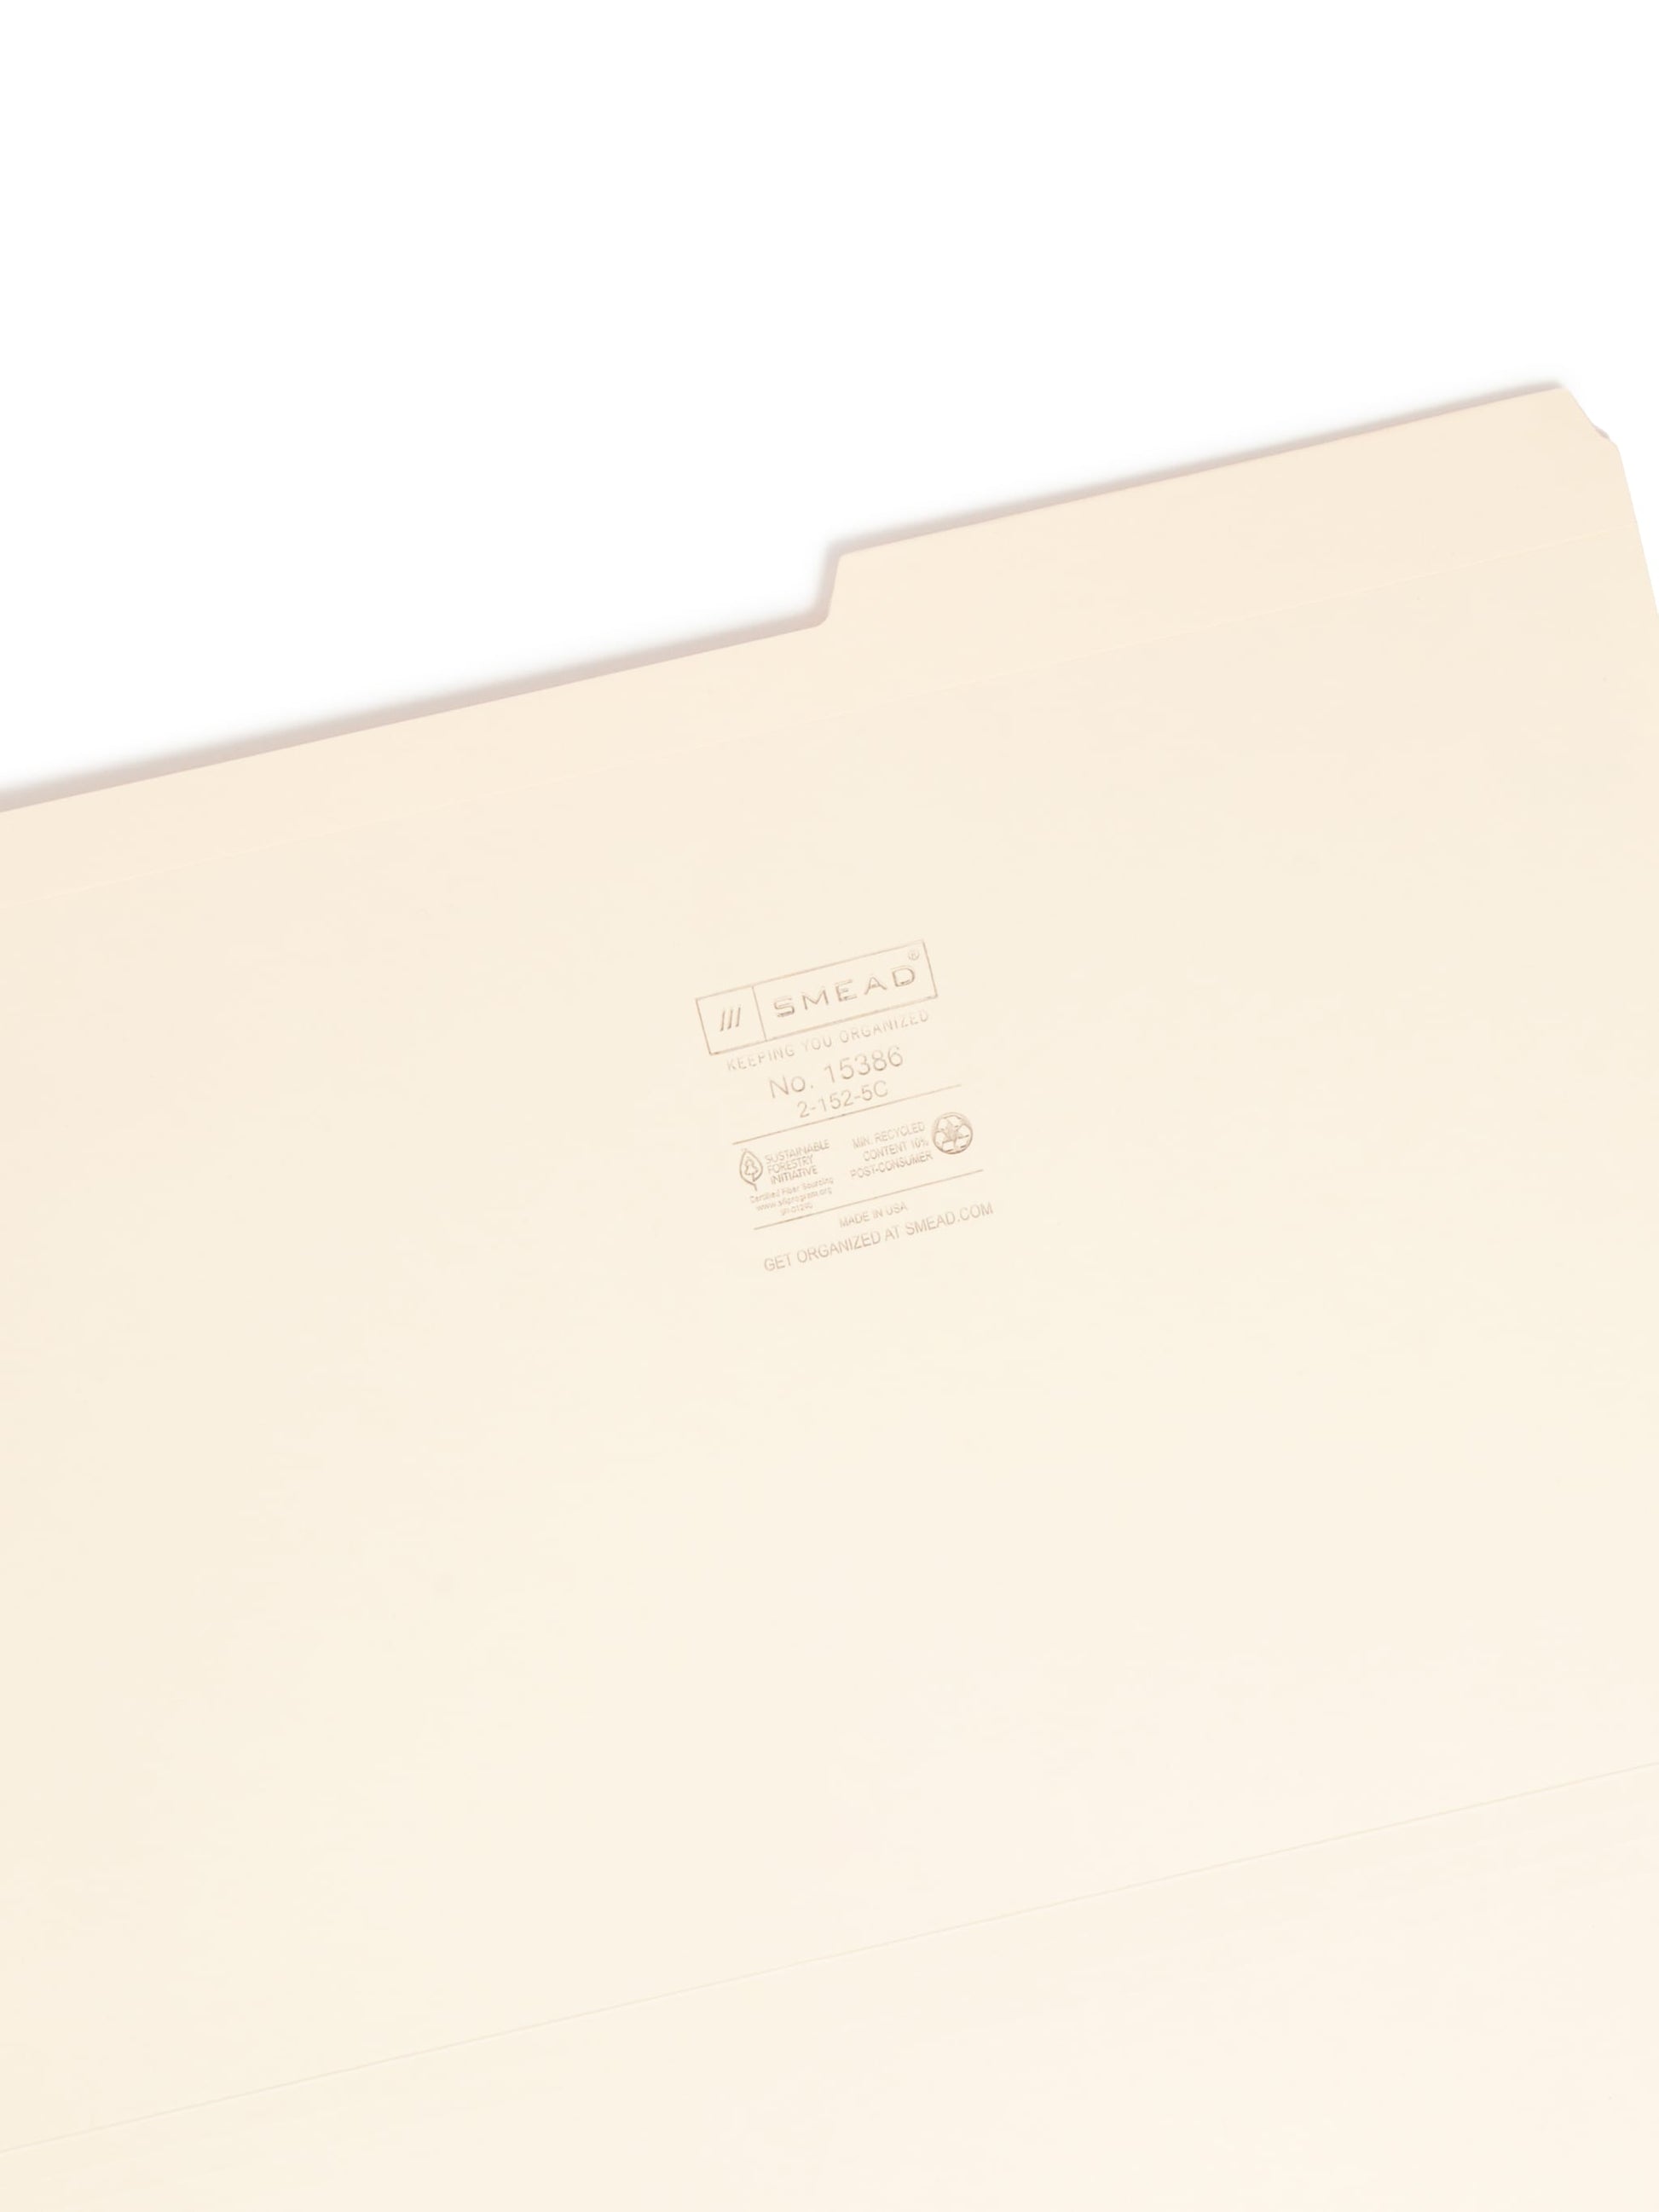 Reinforced Tab File Folders, 2/5-Cut  Right Tab, Manila Color, Legal Size, Set of 100, 086486153867